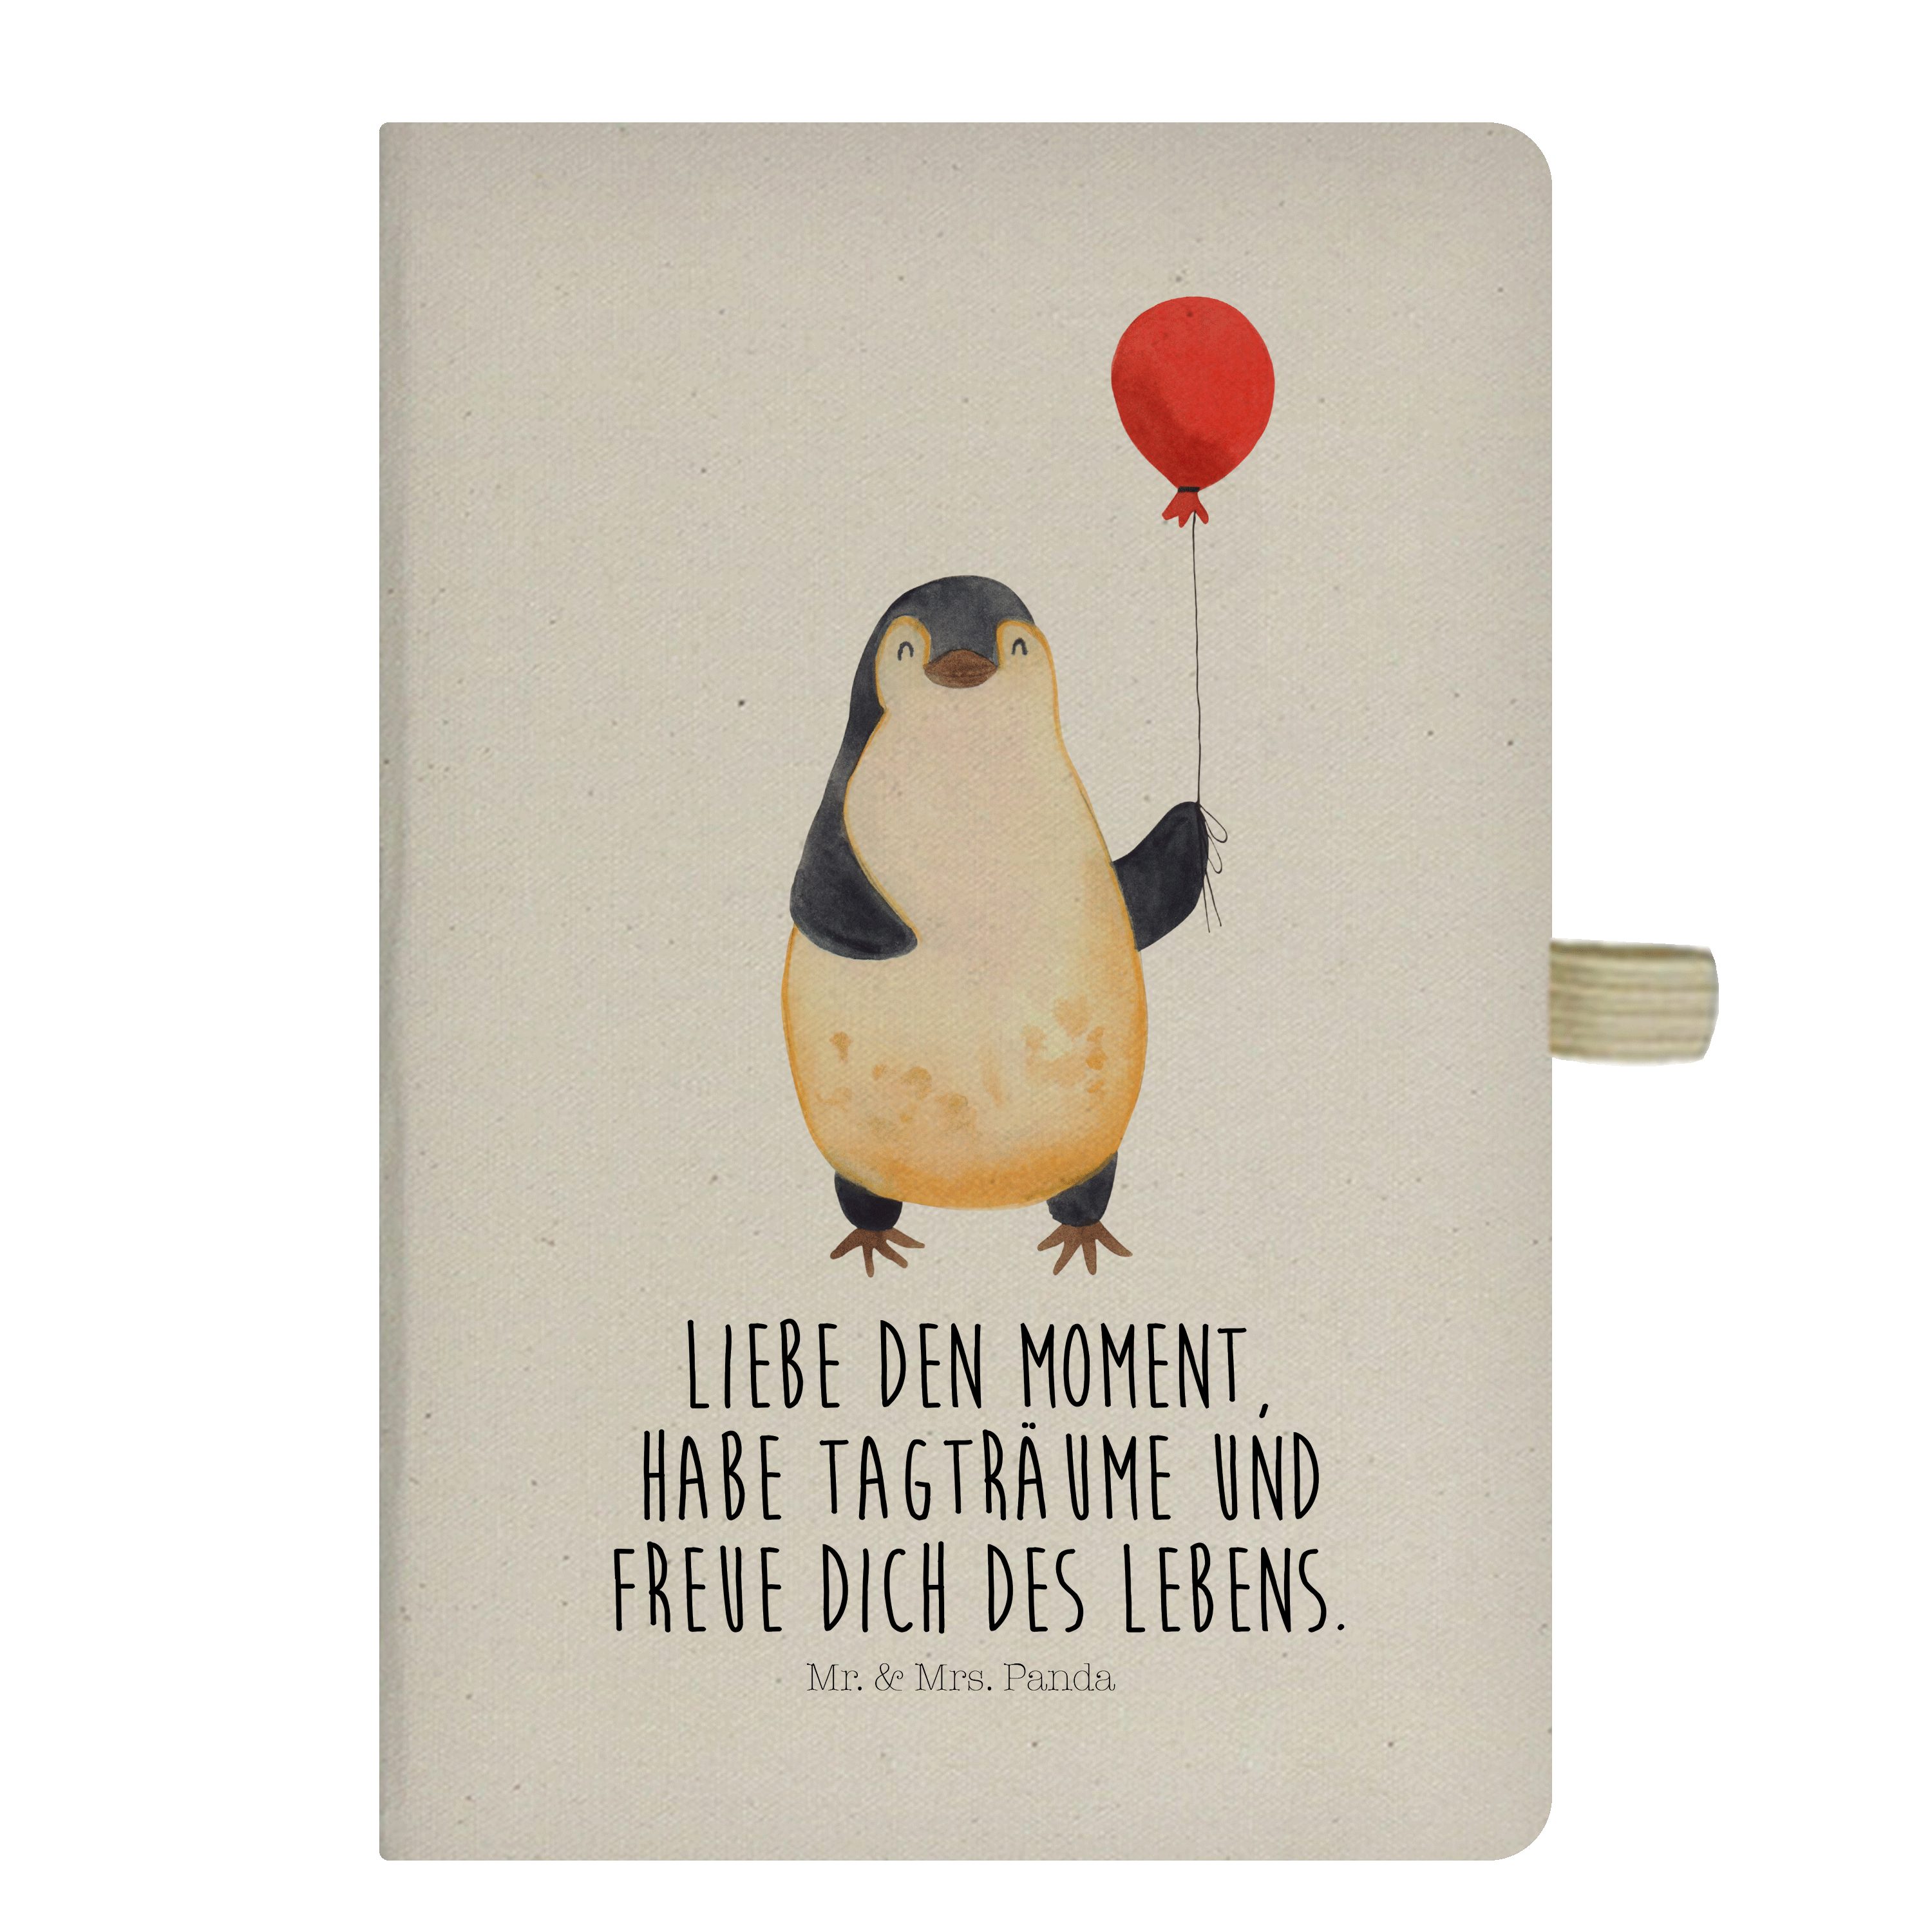 Mr. & Mrs. Geschenk, Panda Transparent & Notizbuch Laune, Luftballon Pinguin Ski Journal, - - Mr. Mrs. Panda gute